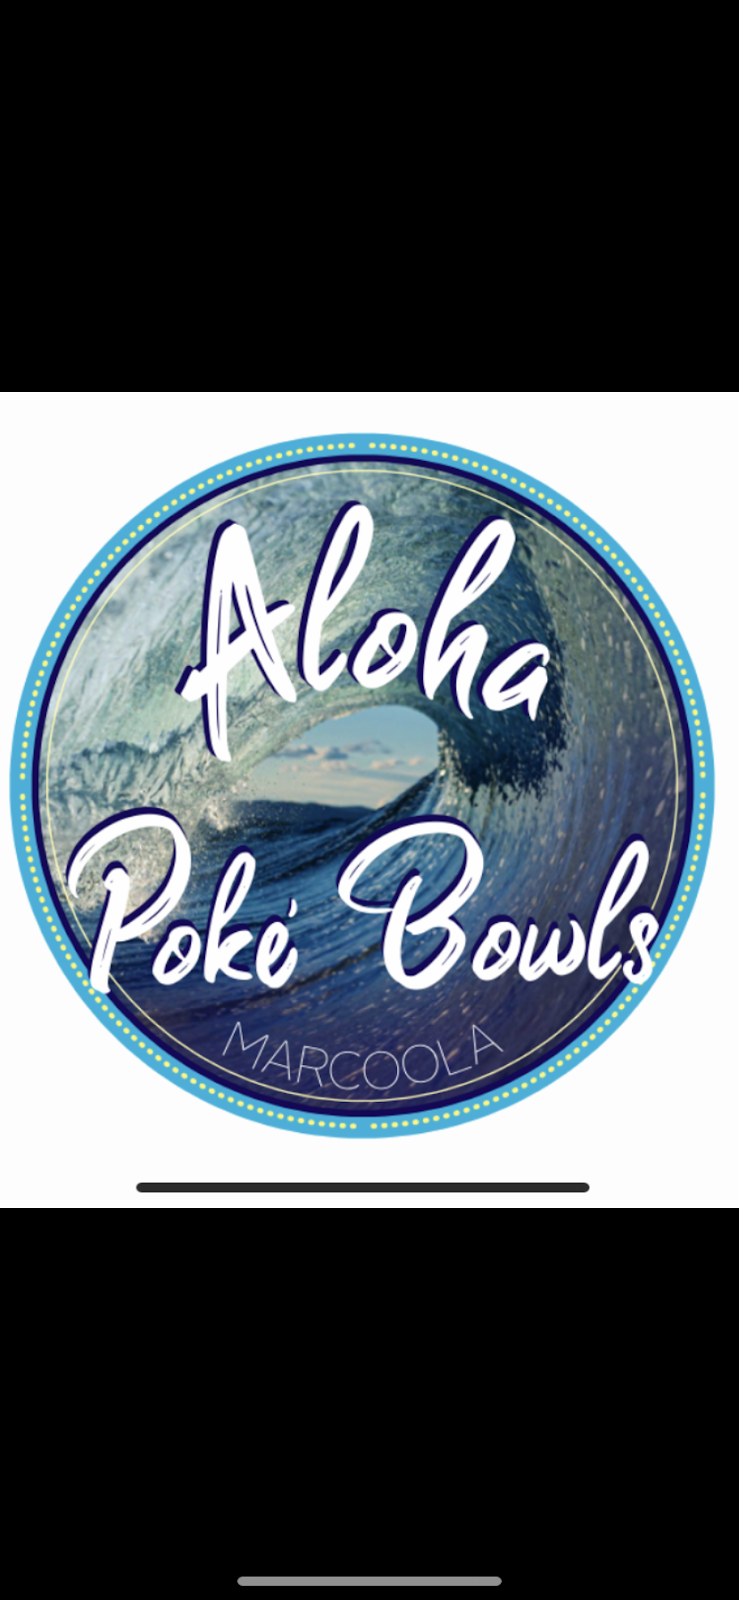 Aloha poke bowls | restaurant | 938 David Low Way, Marcoola QLD 4564, Australia | 0401846737 OR +61 401 846 737